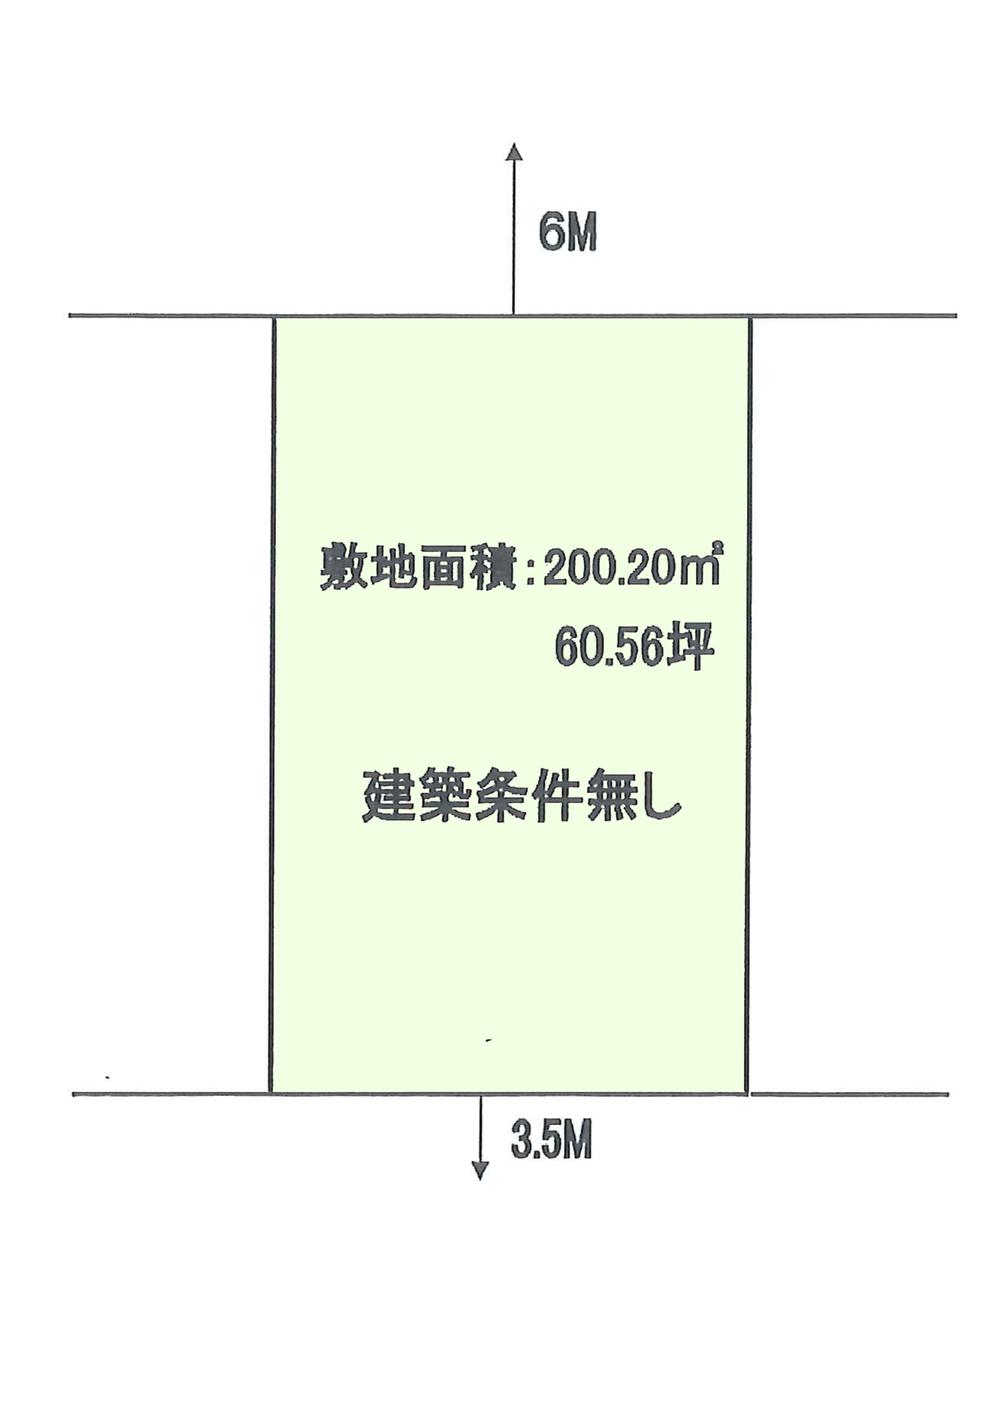 Compartment figure. Land price 18 million yen, Land area 200.2 sq m